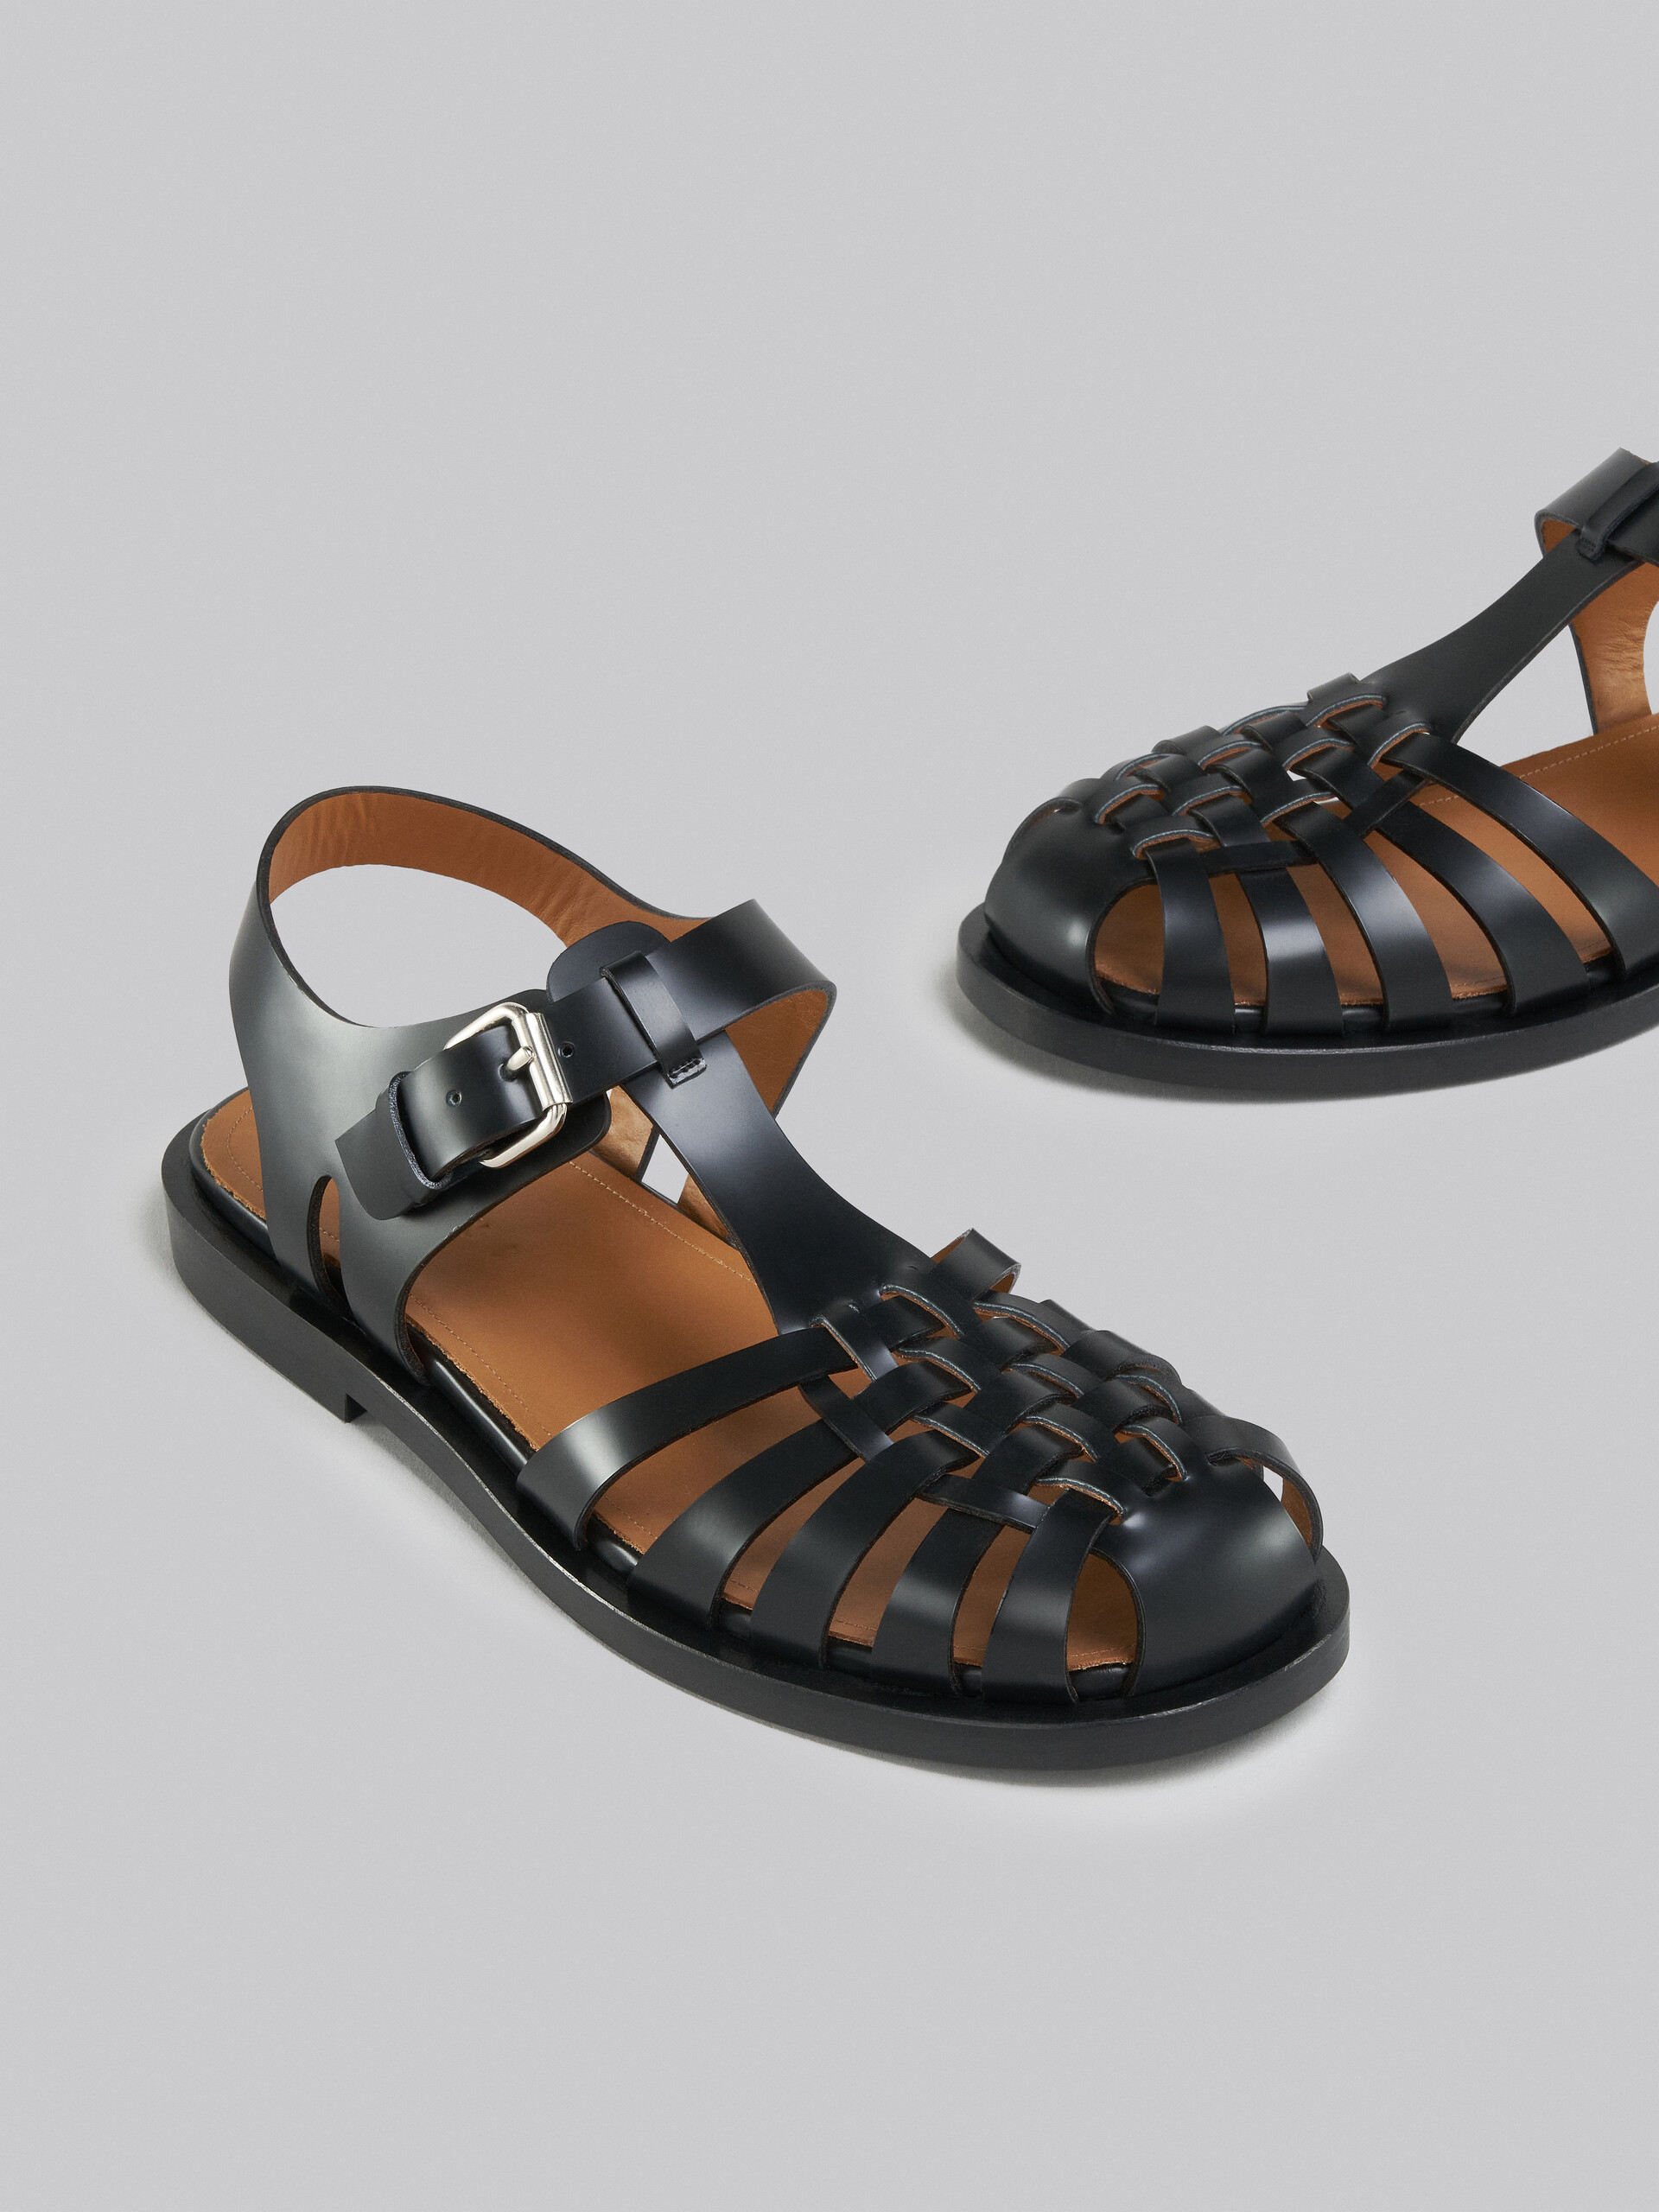 Black leather fisherman's sandal - Sandals - Image 5